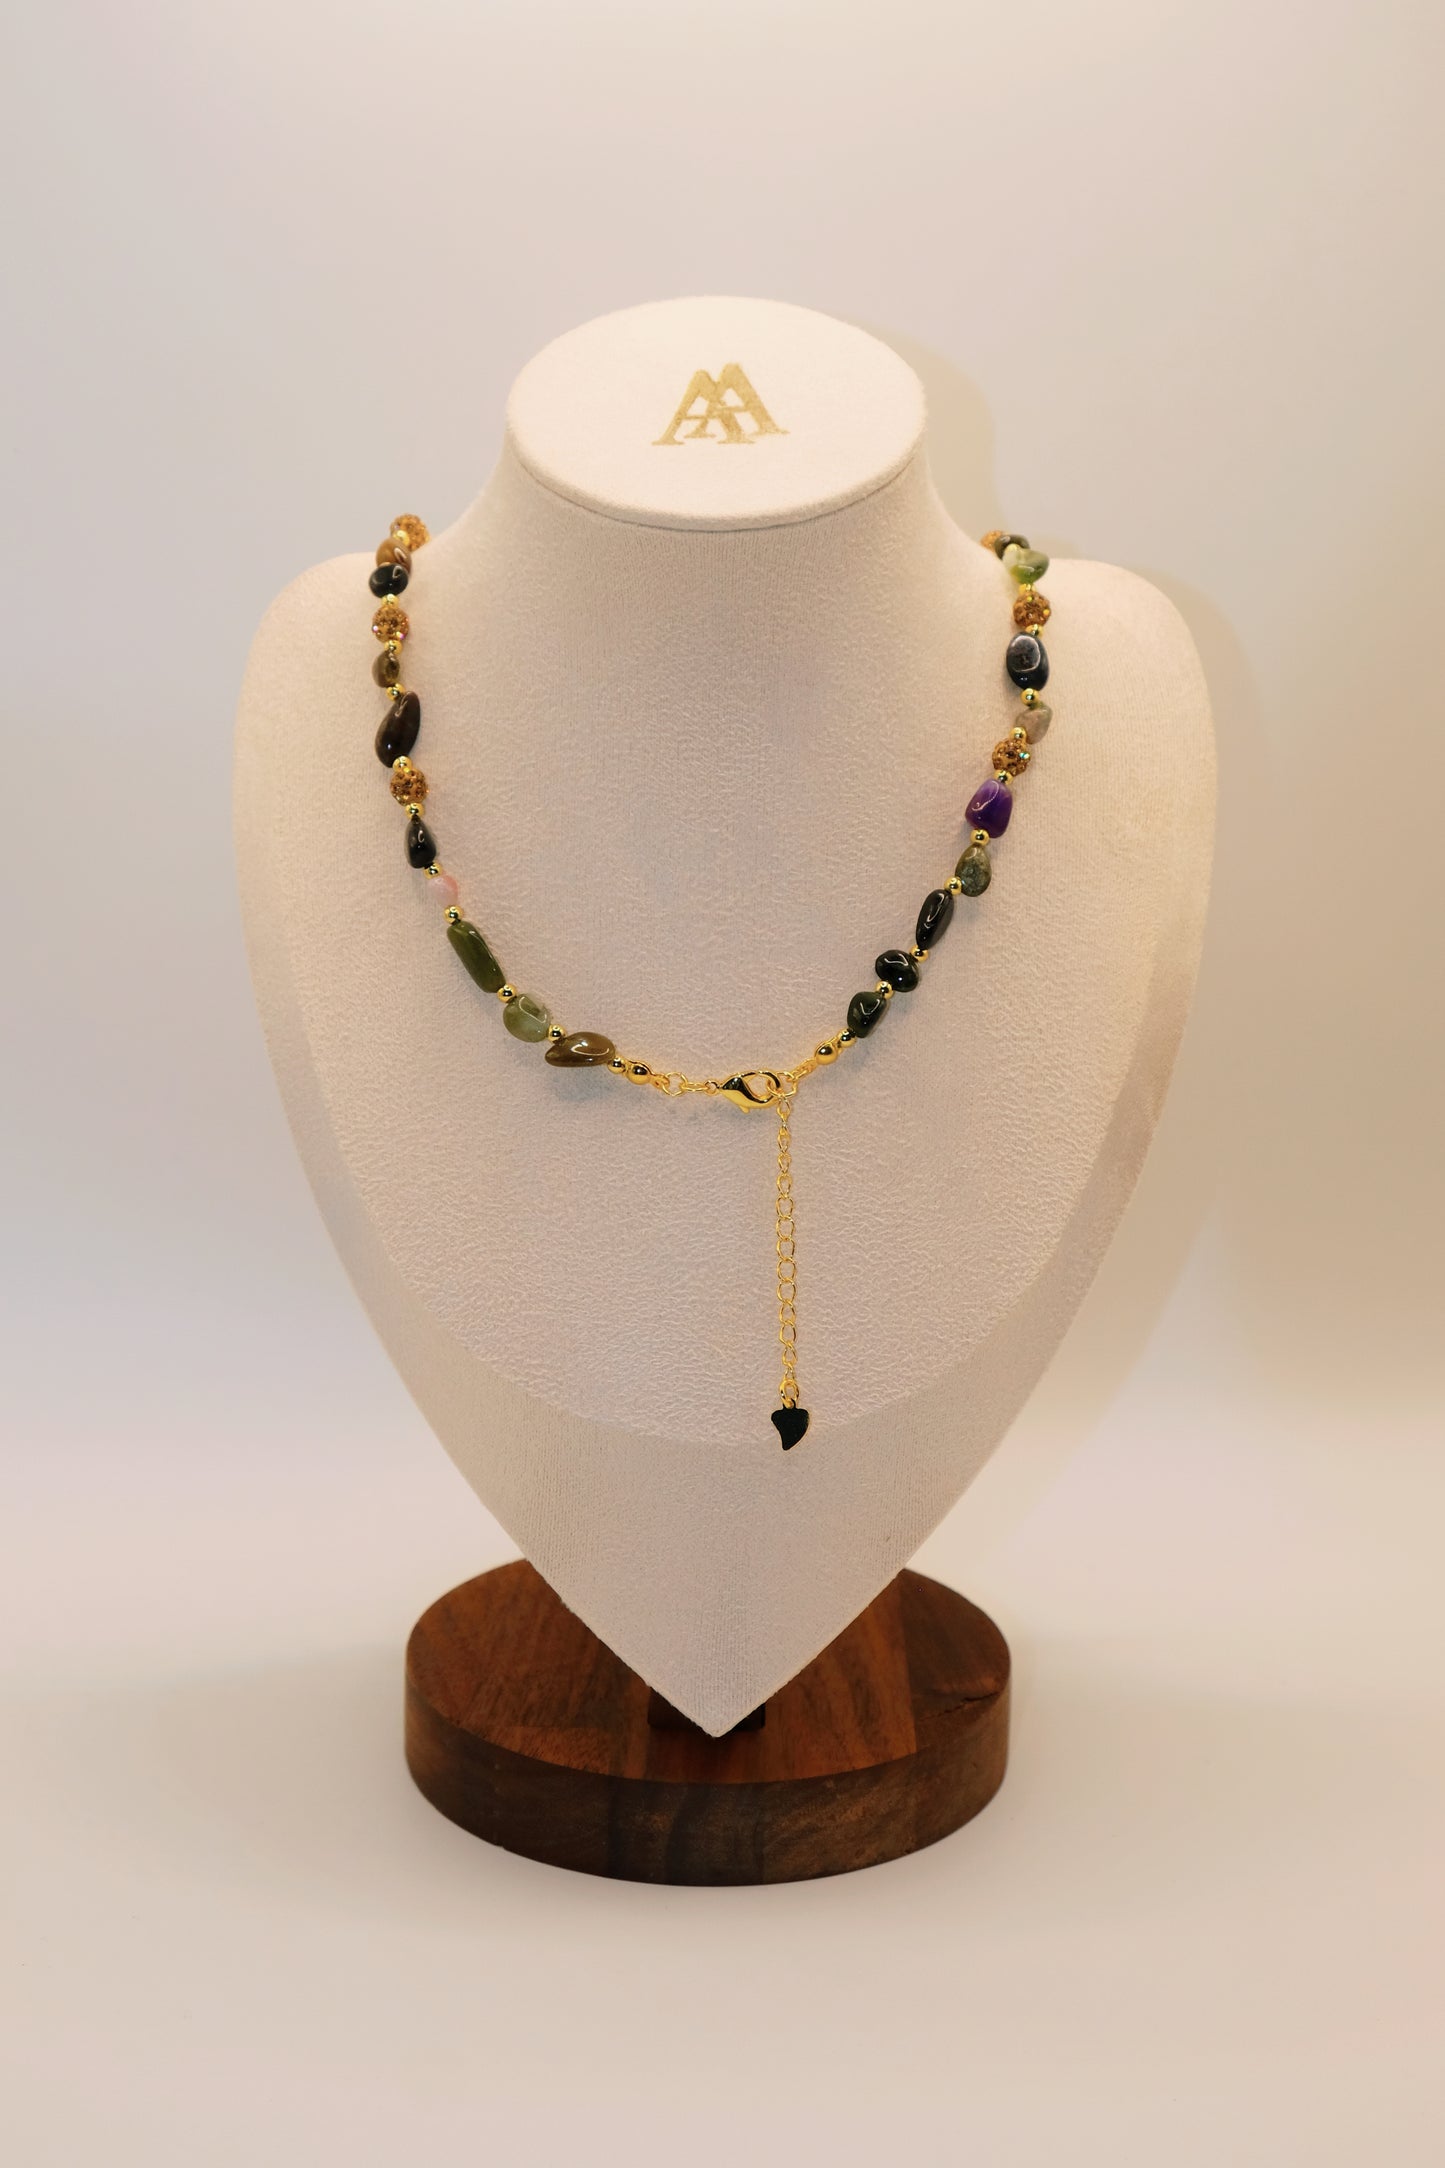 Colorful Sudan Stone Tourmaline Necklace